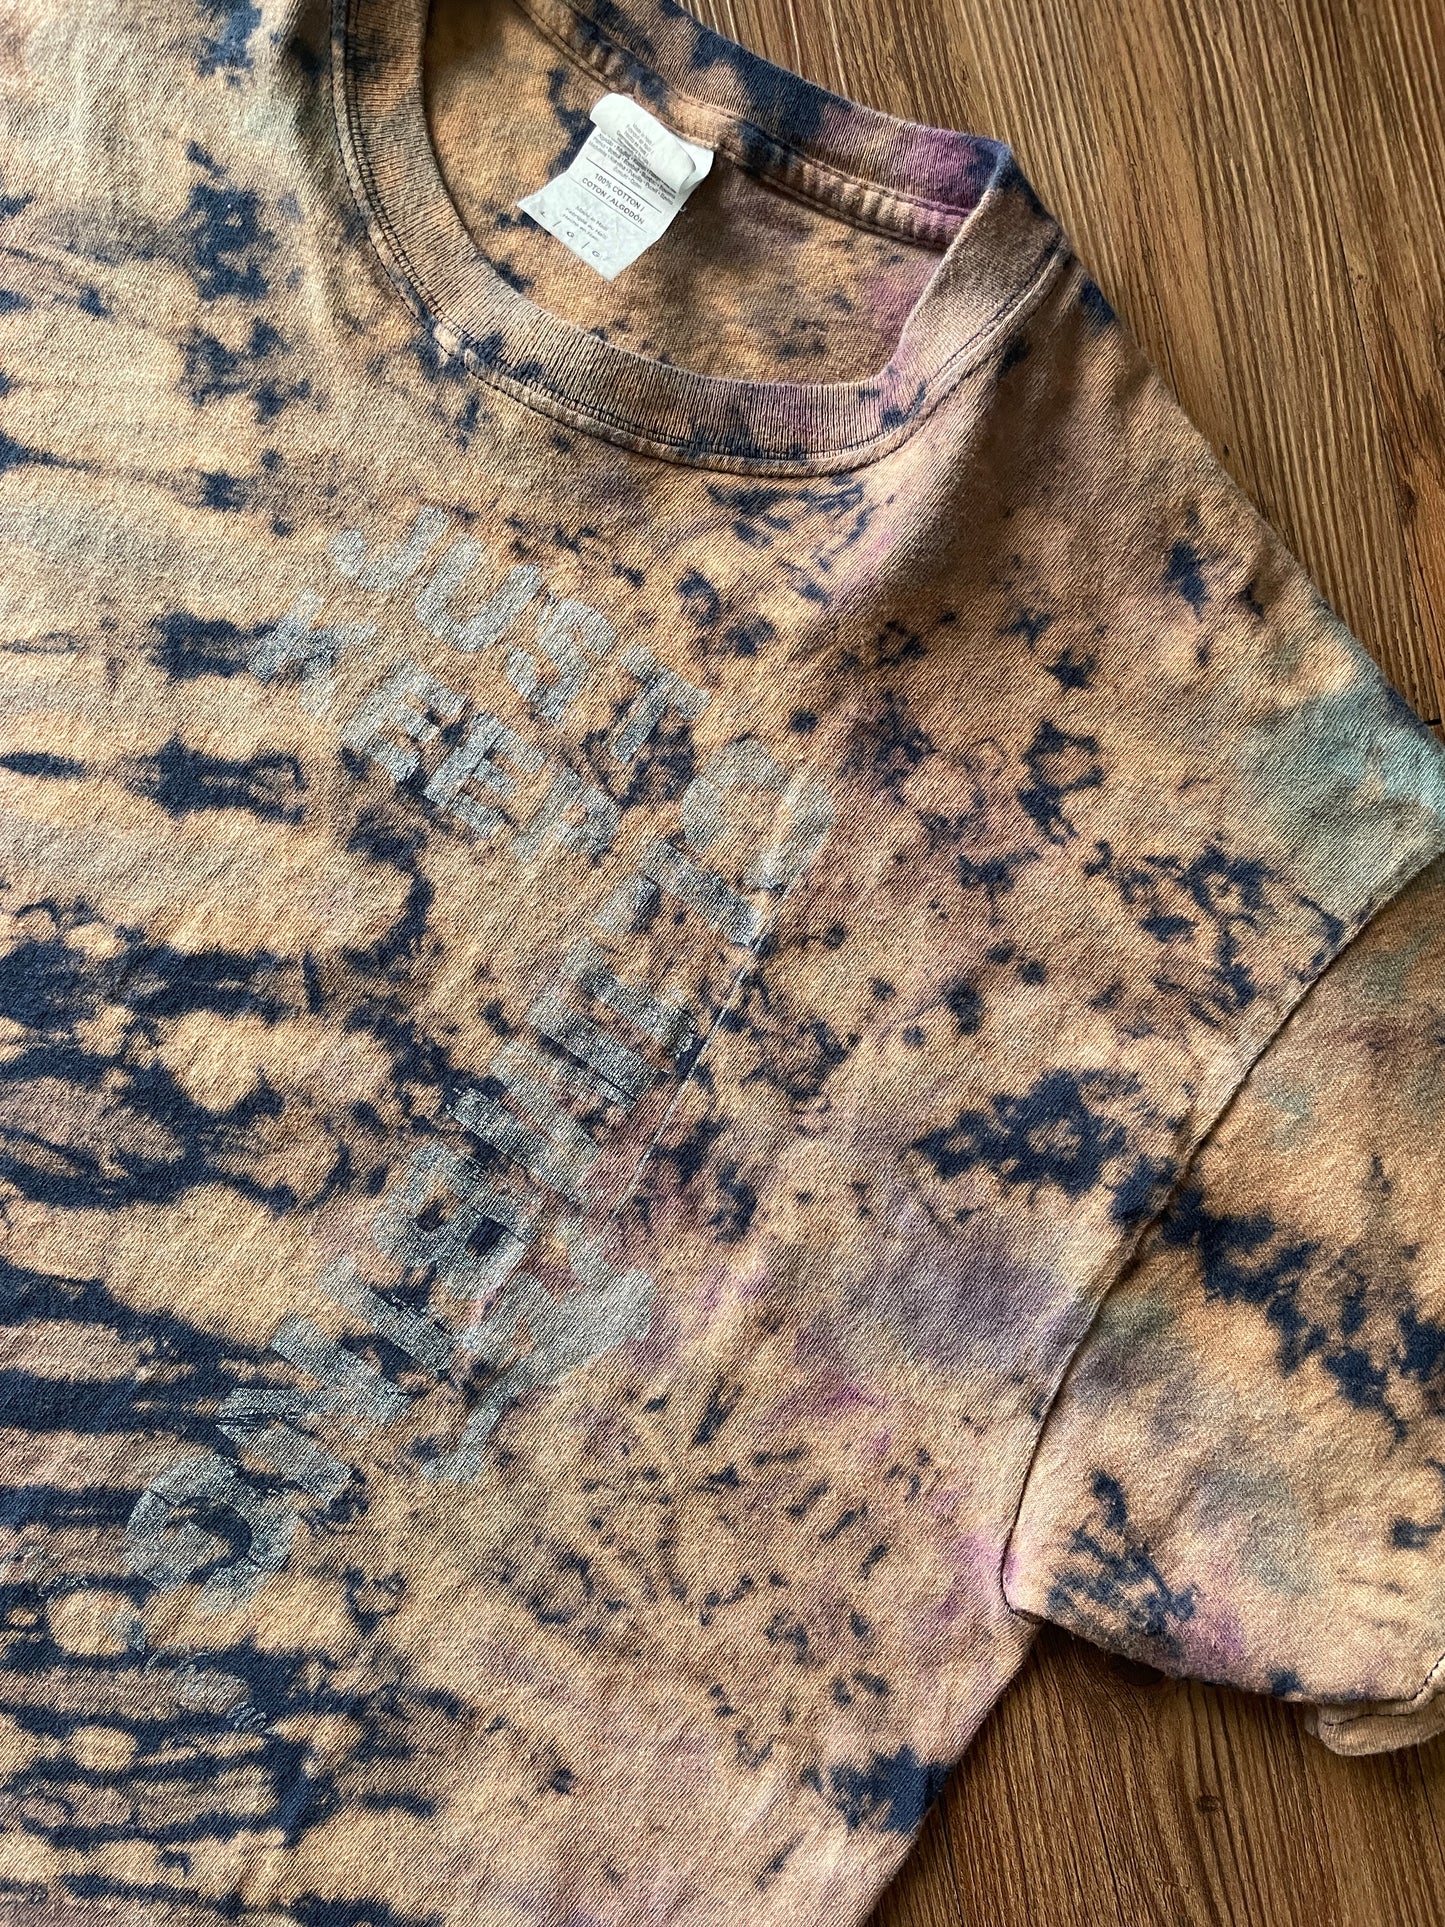 LARGE Men’s Just Keep Climbing Reverse Tie Dye T-Shirt | Blue and Brown Crumpled Bleach Dye Short Sleeve Top